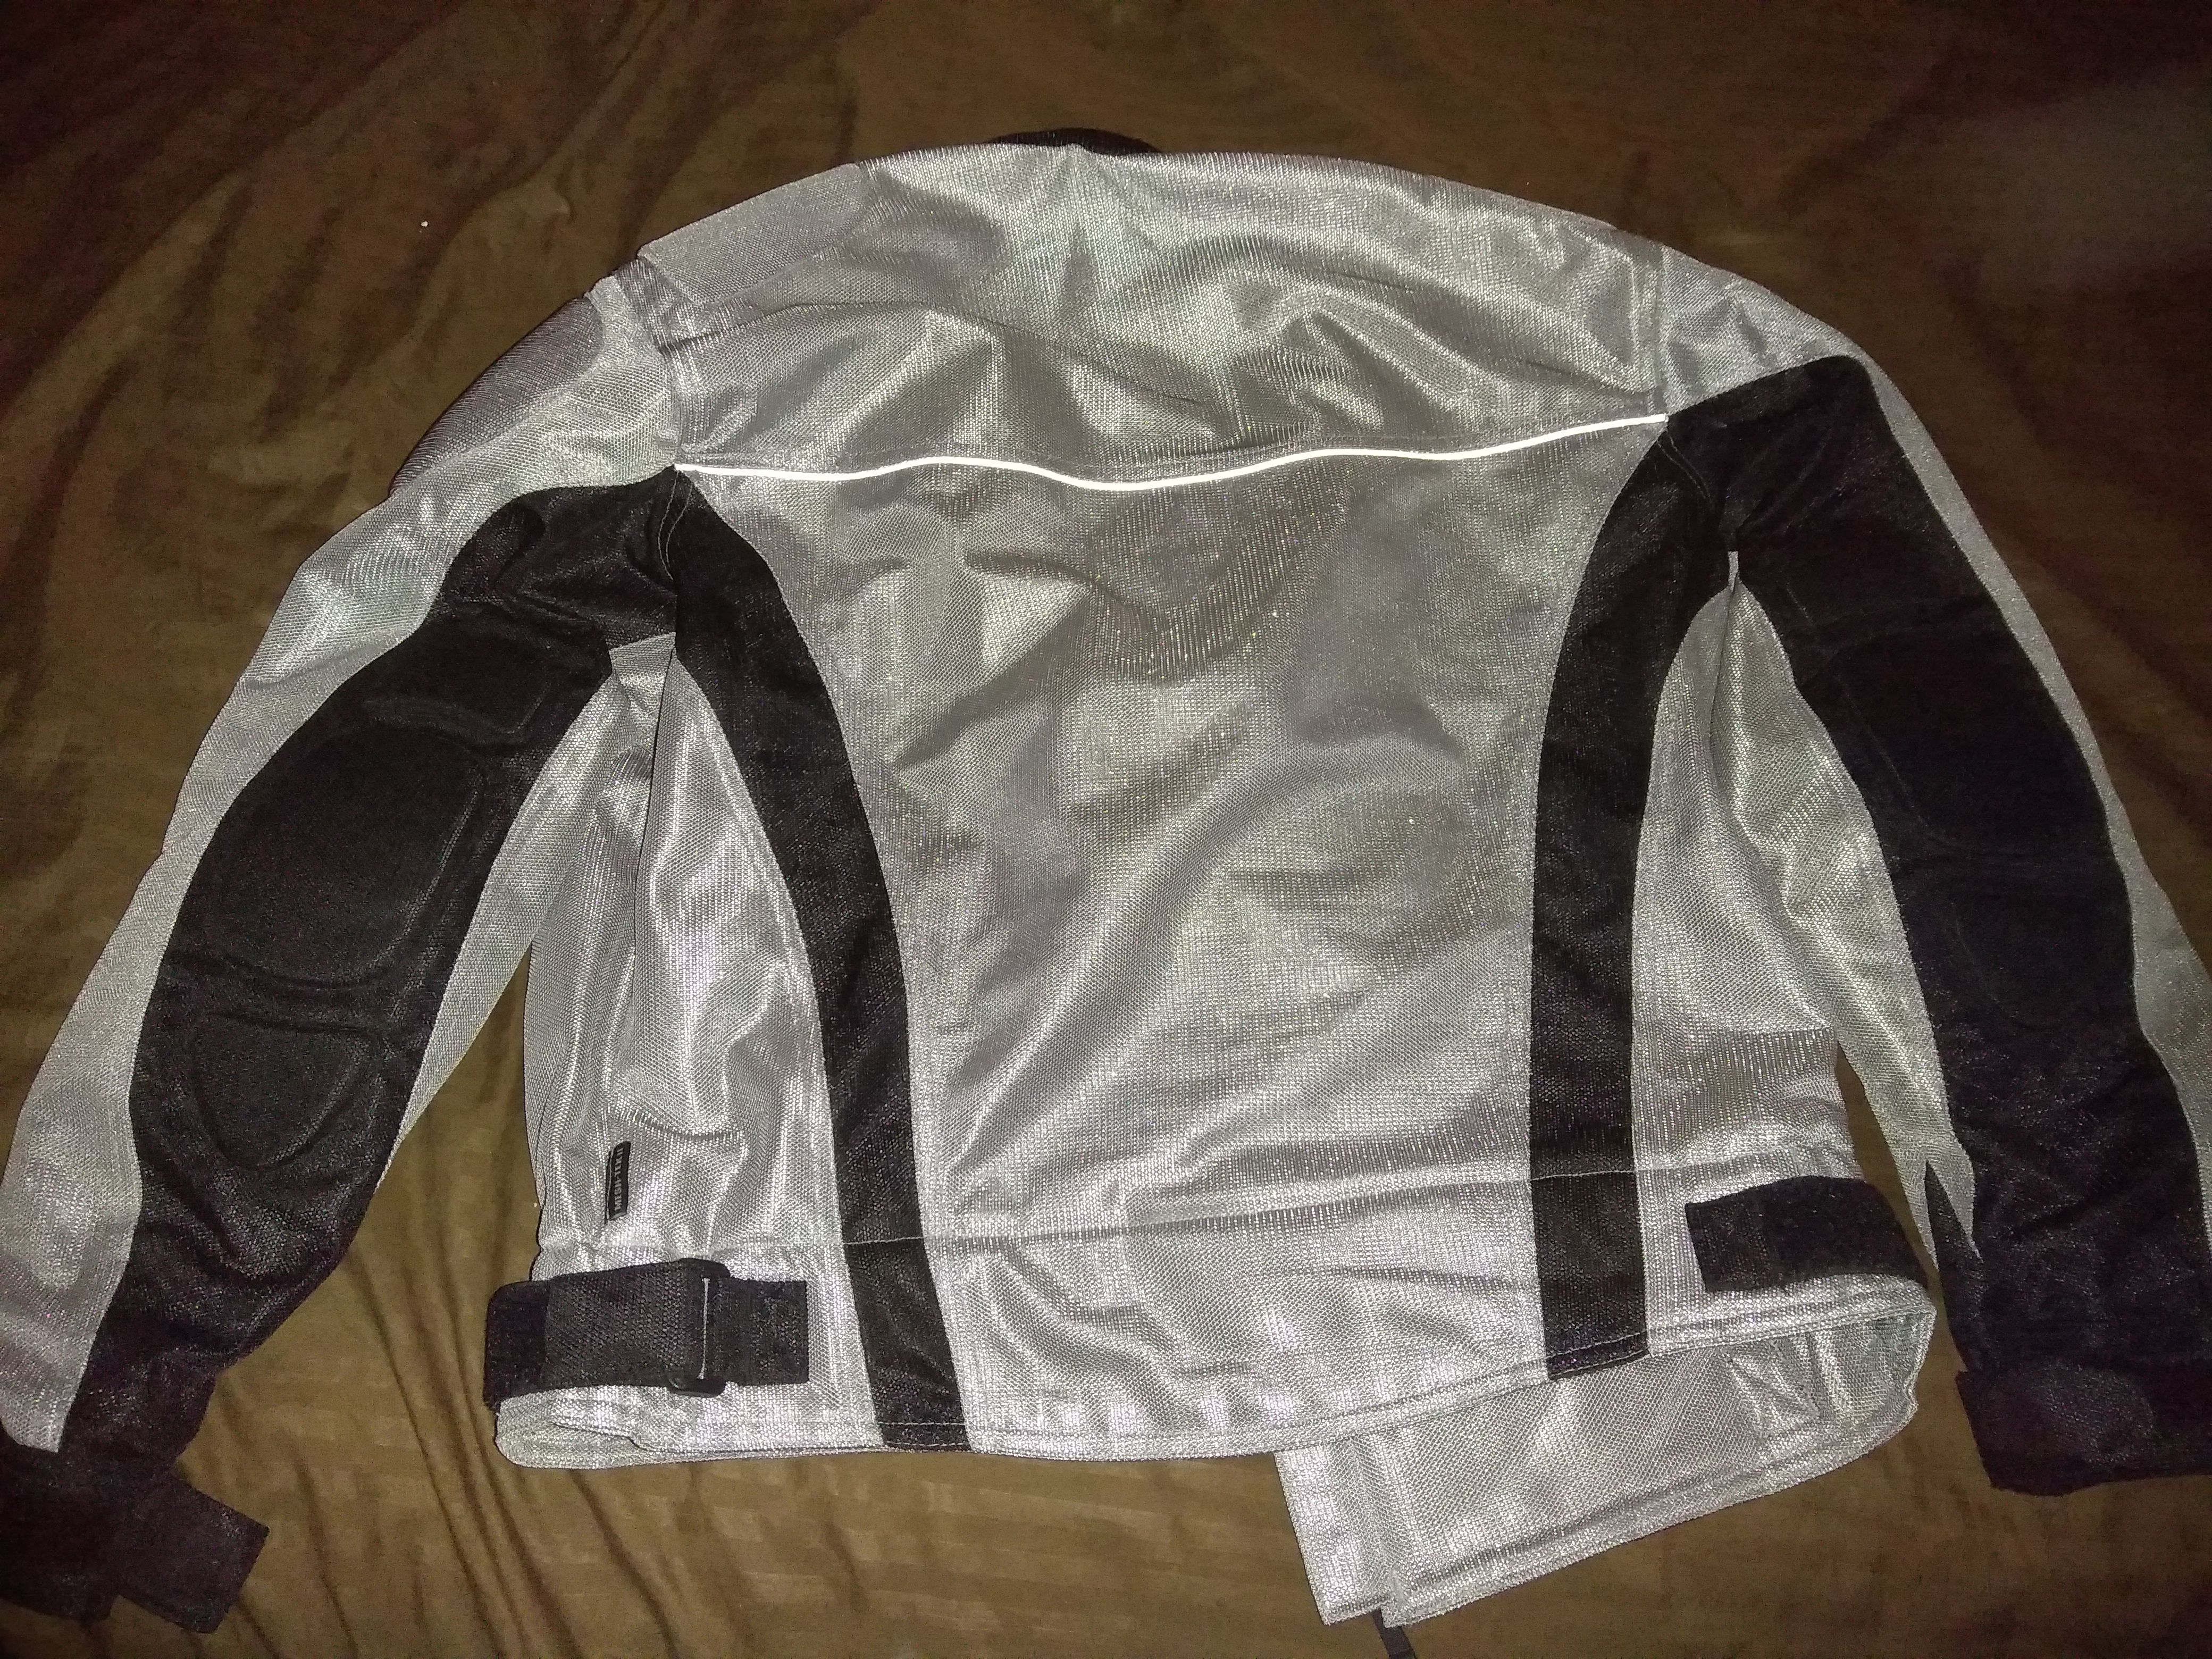 First gear meshtex2 motorcycle jacket so. Small